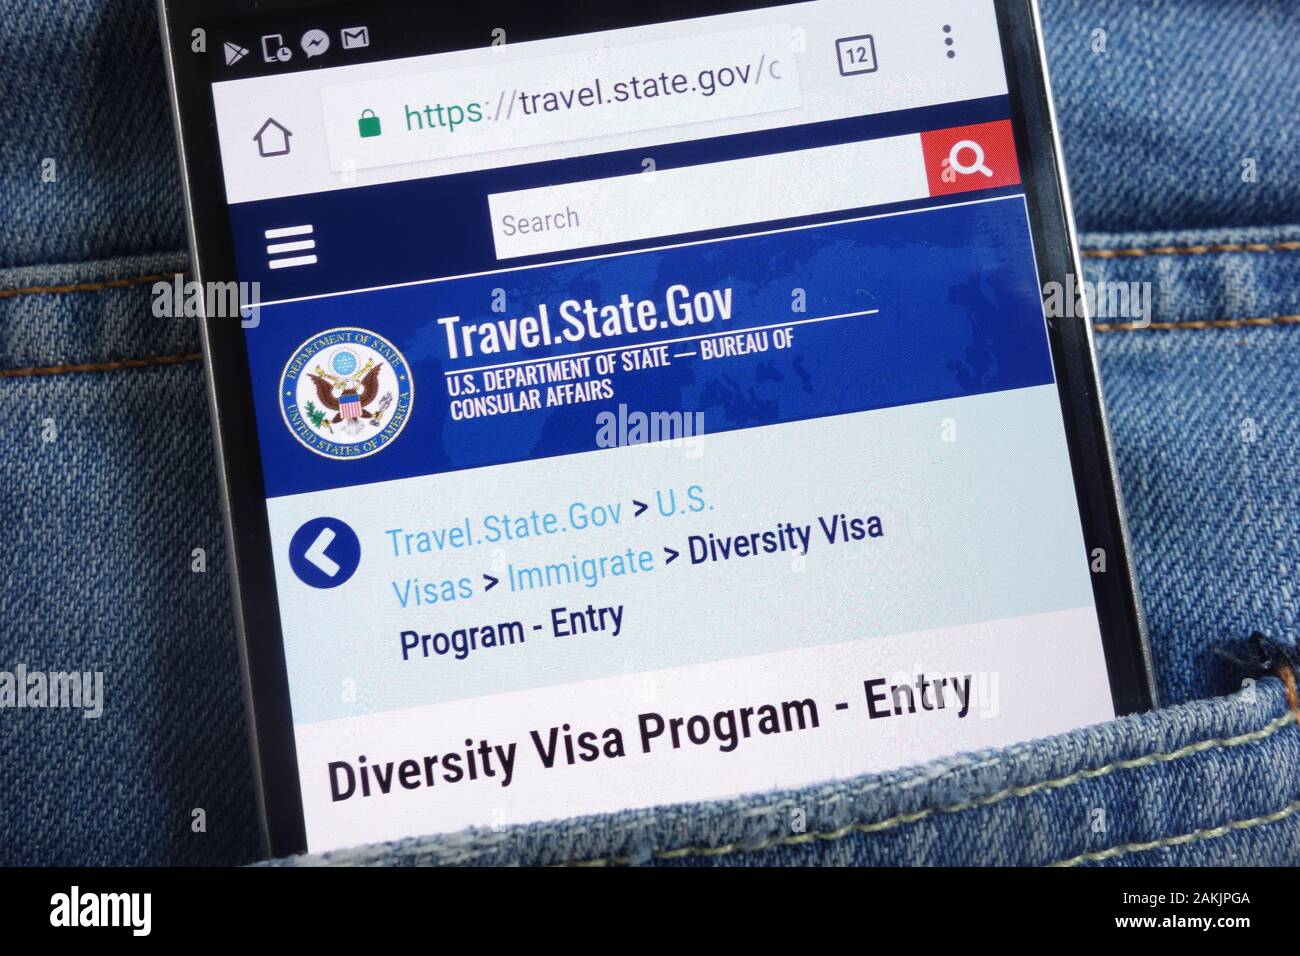 US Department of State website about Diversity Visa Program displayed on smartphone hidden in jeans pocket Stock Photo